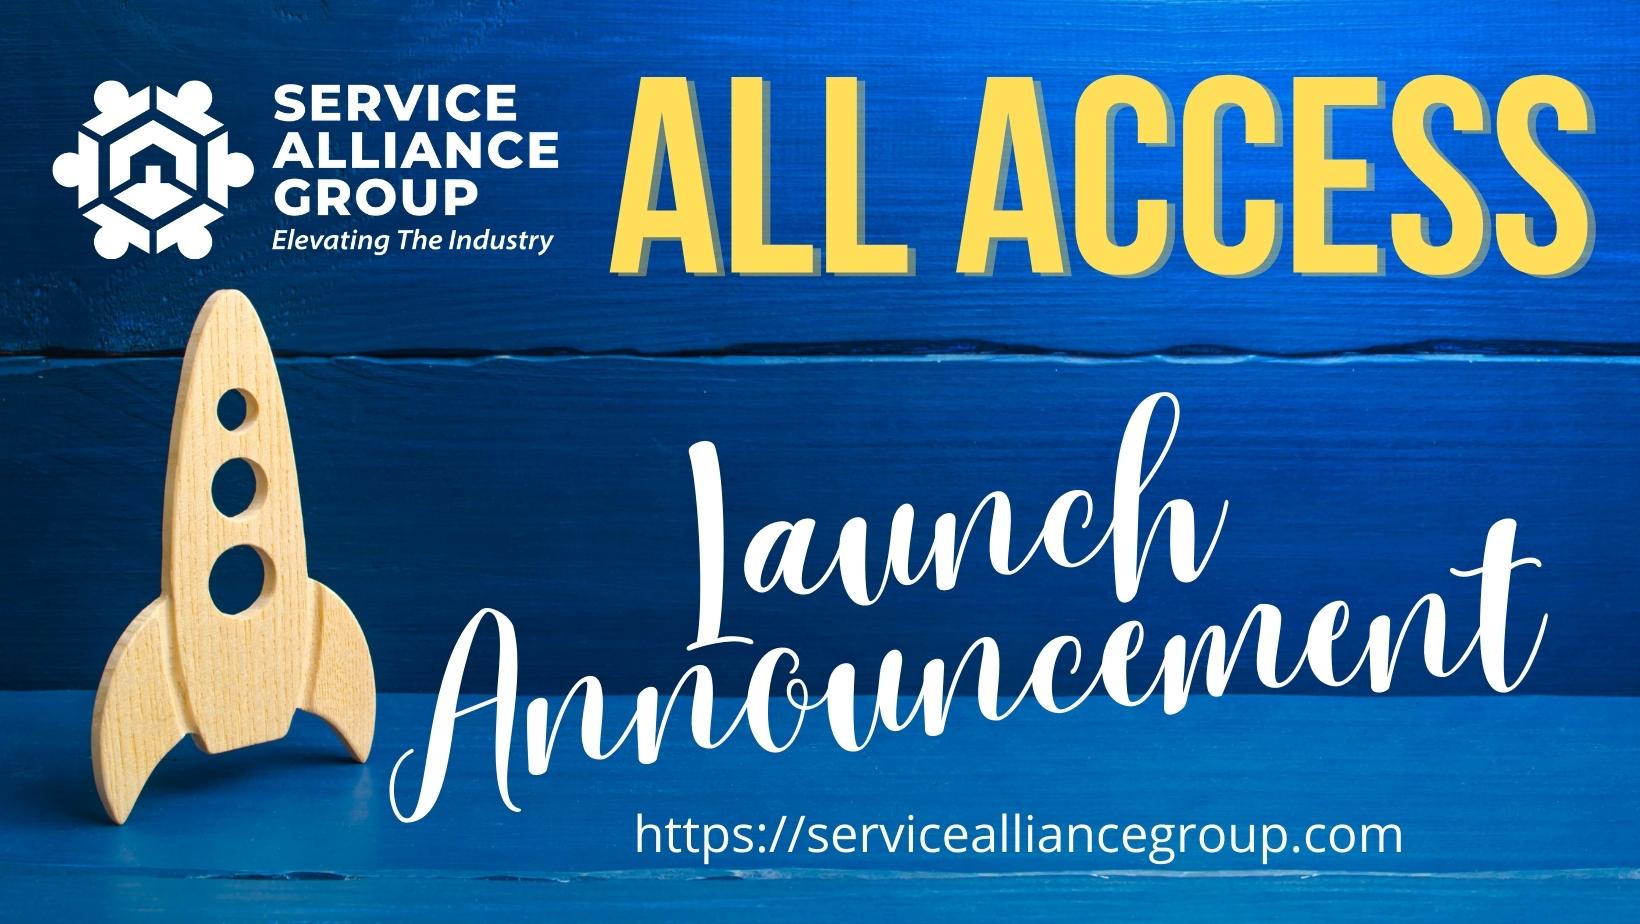 Service Alliance Group Trade Association launch announcement